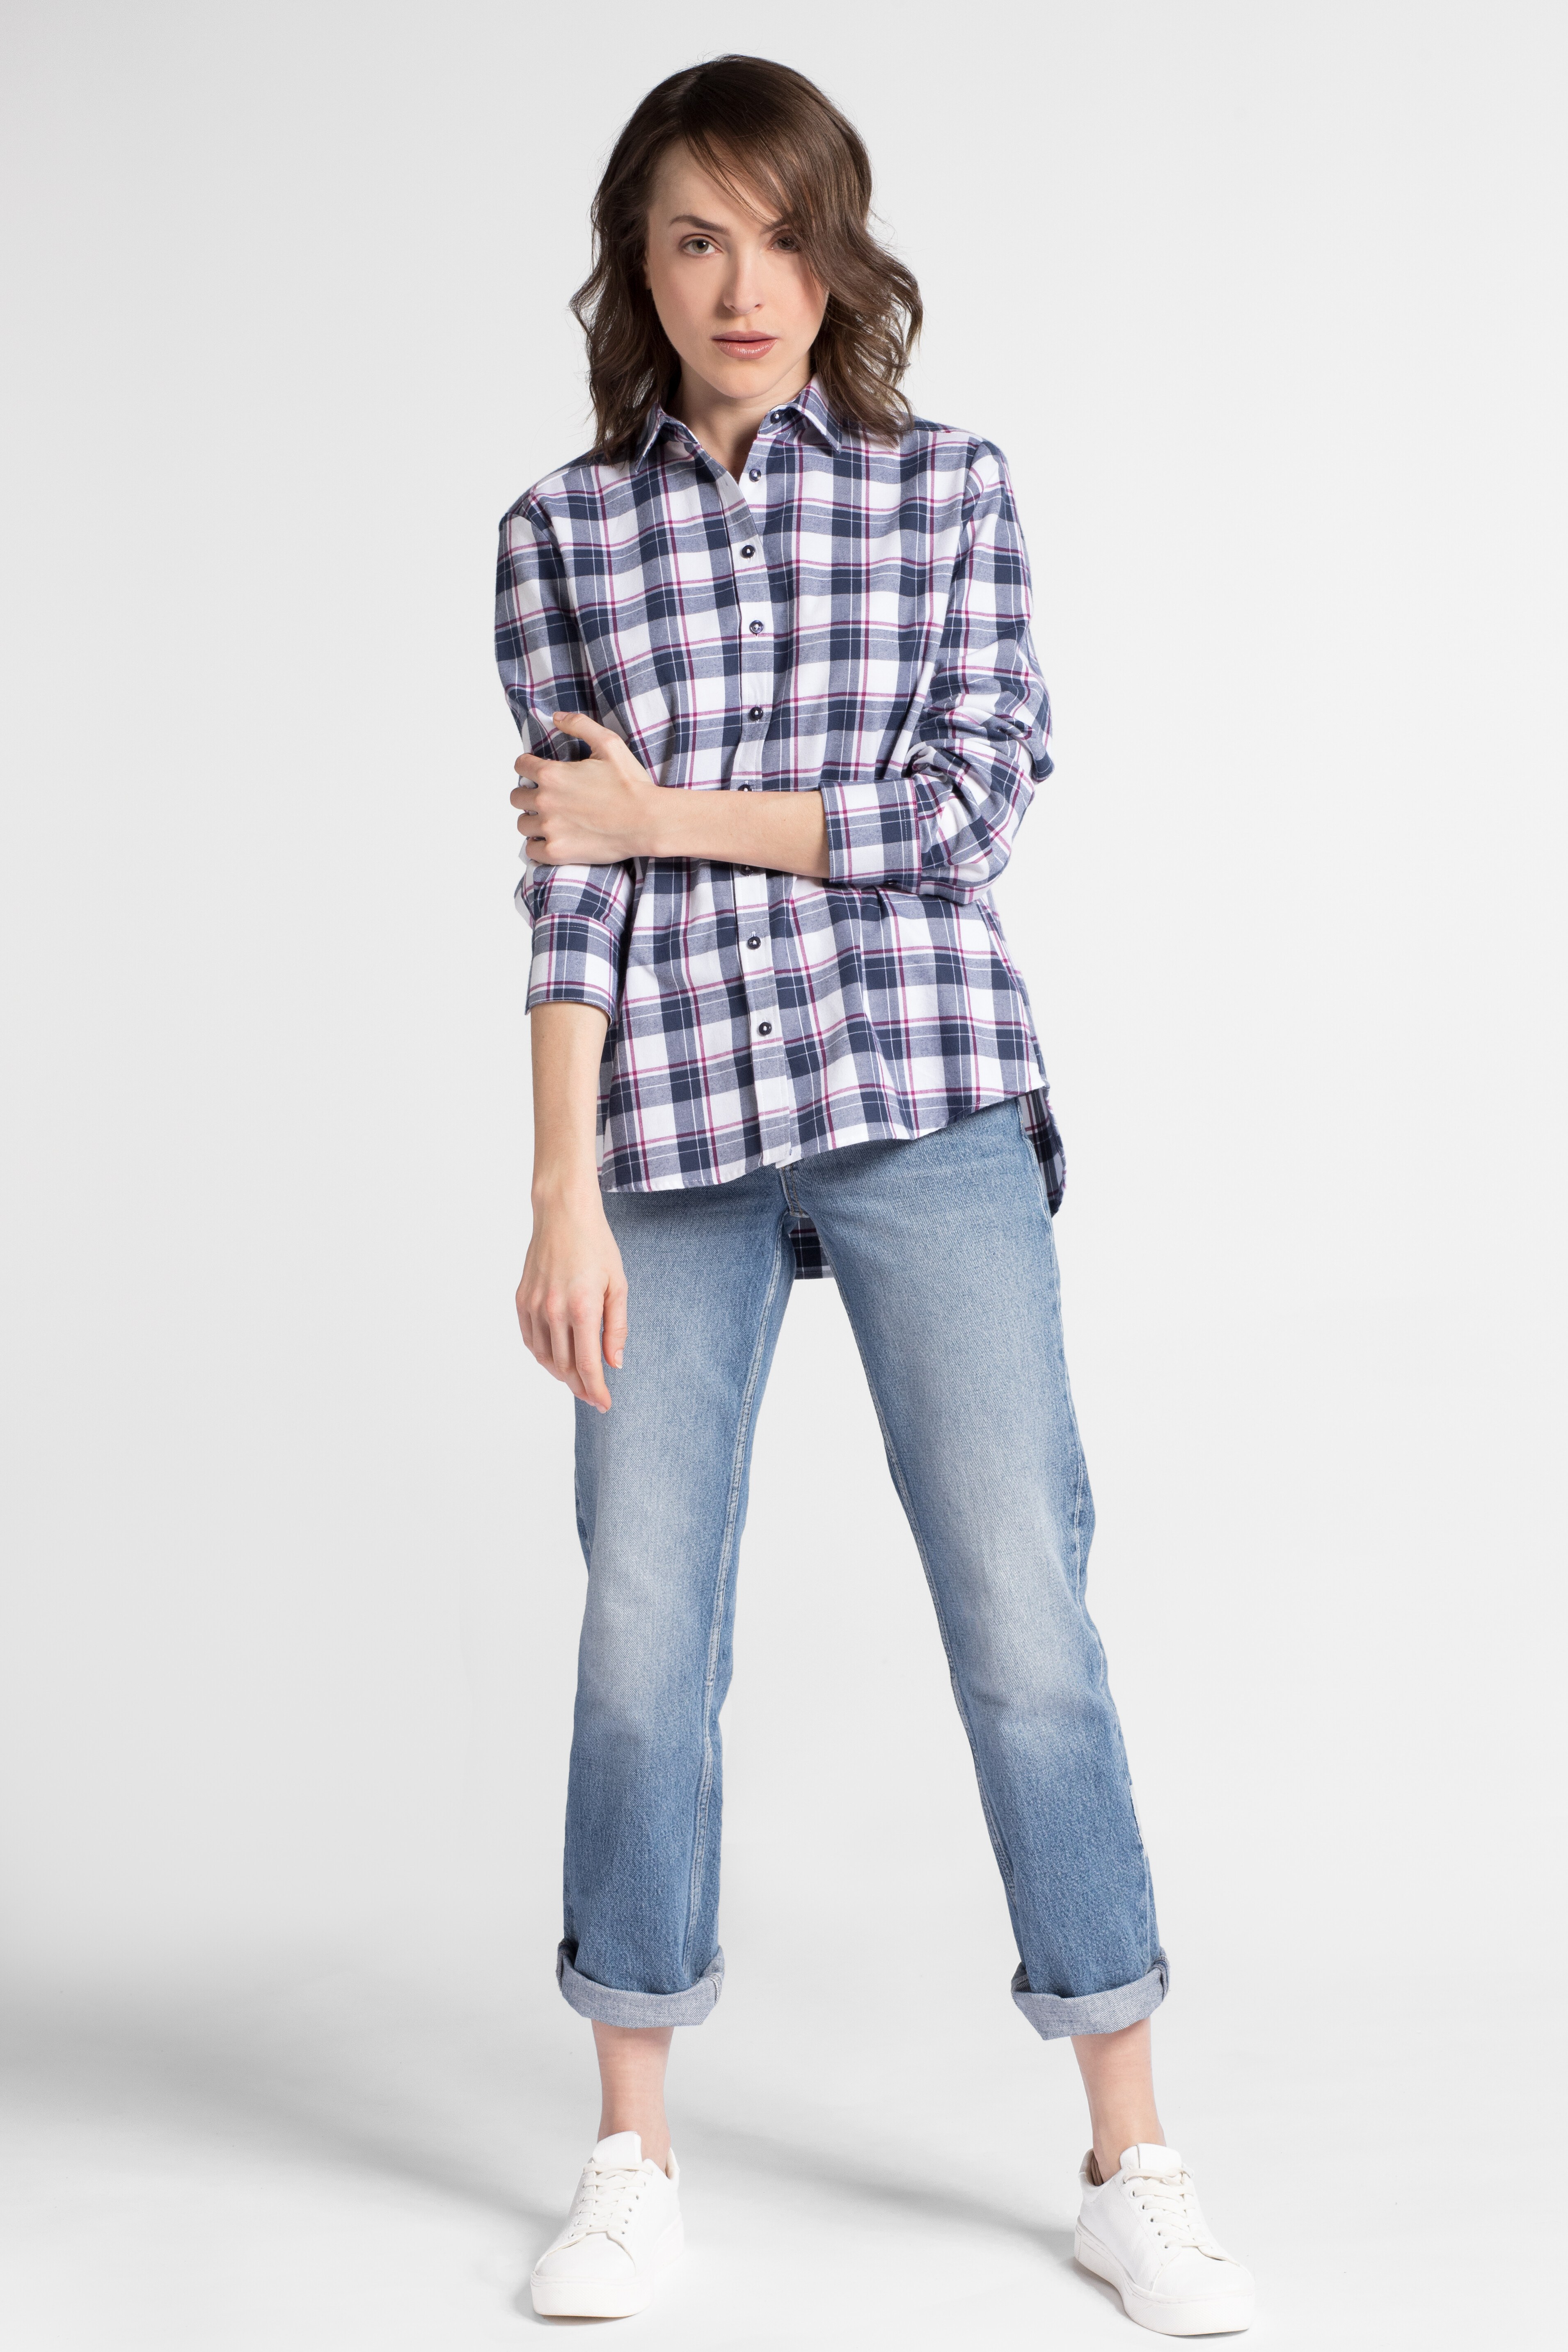 Bluse | | MODERN CLASSIC | Eterna | 6268 blau-weiß Blusen | kariert Flannel Langarm Fit Modern Damen ETERNA D614.19 Jeans-Manufaktur Bekleidung